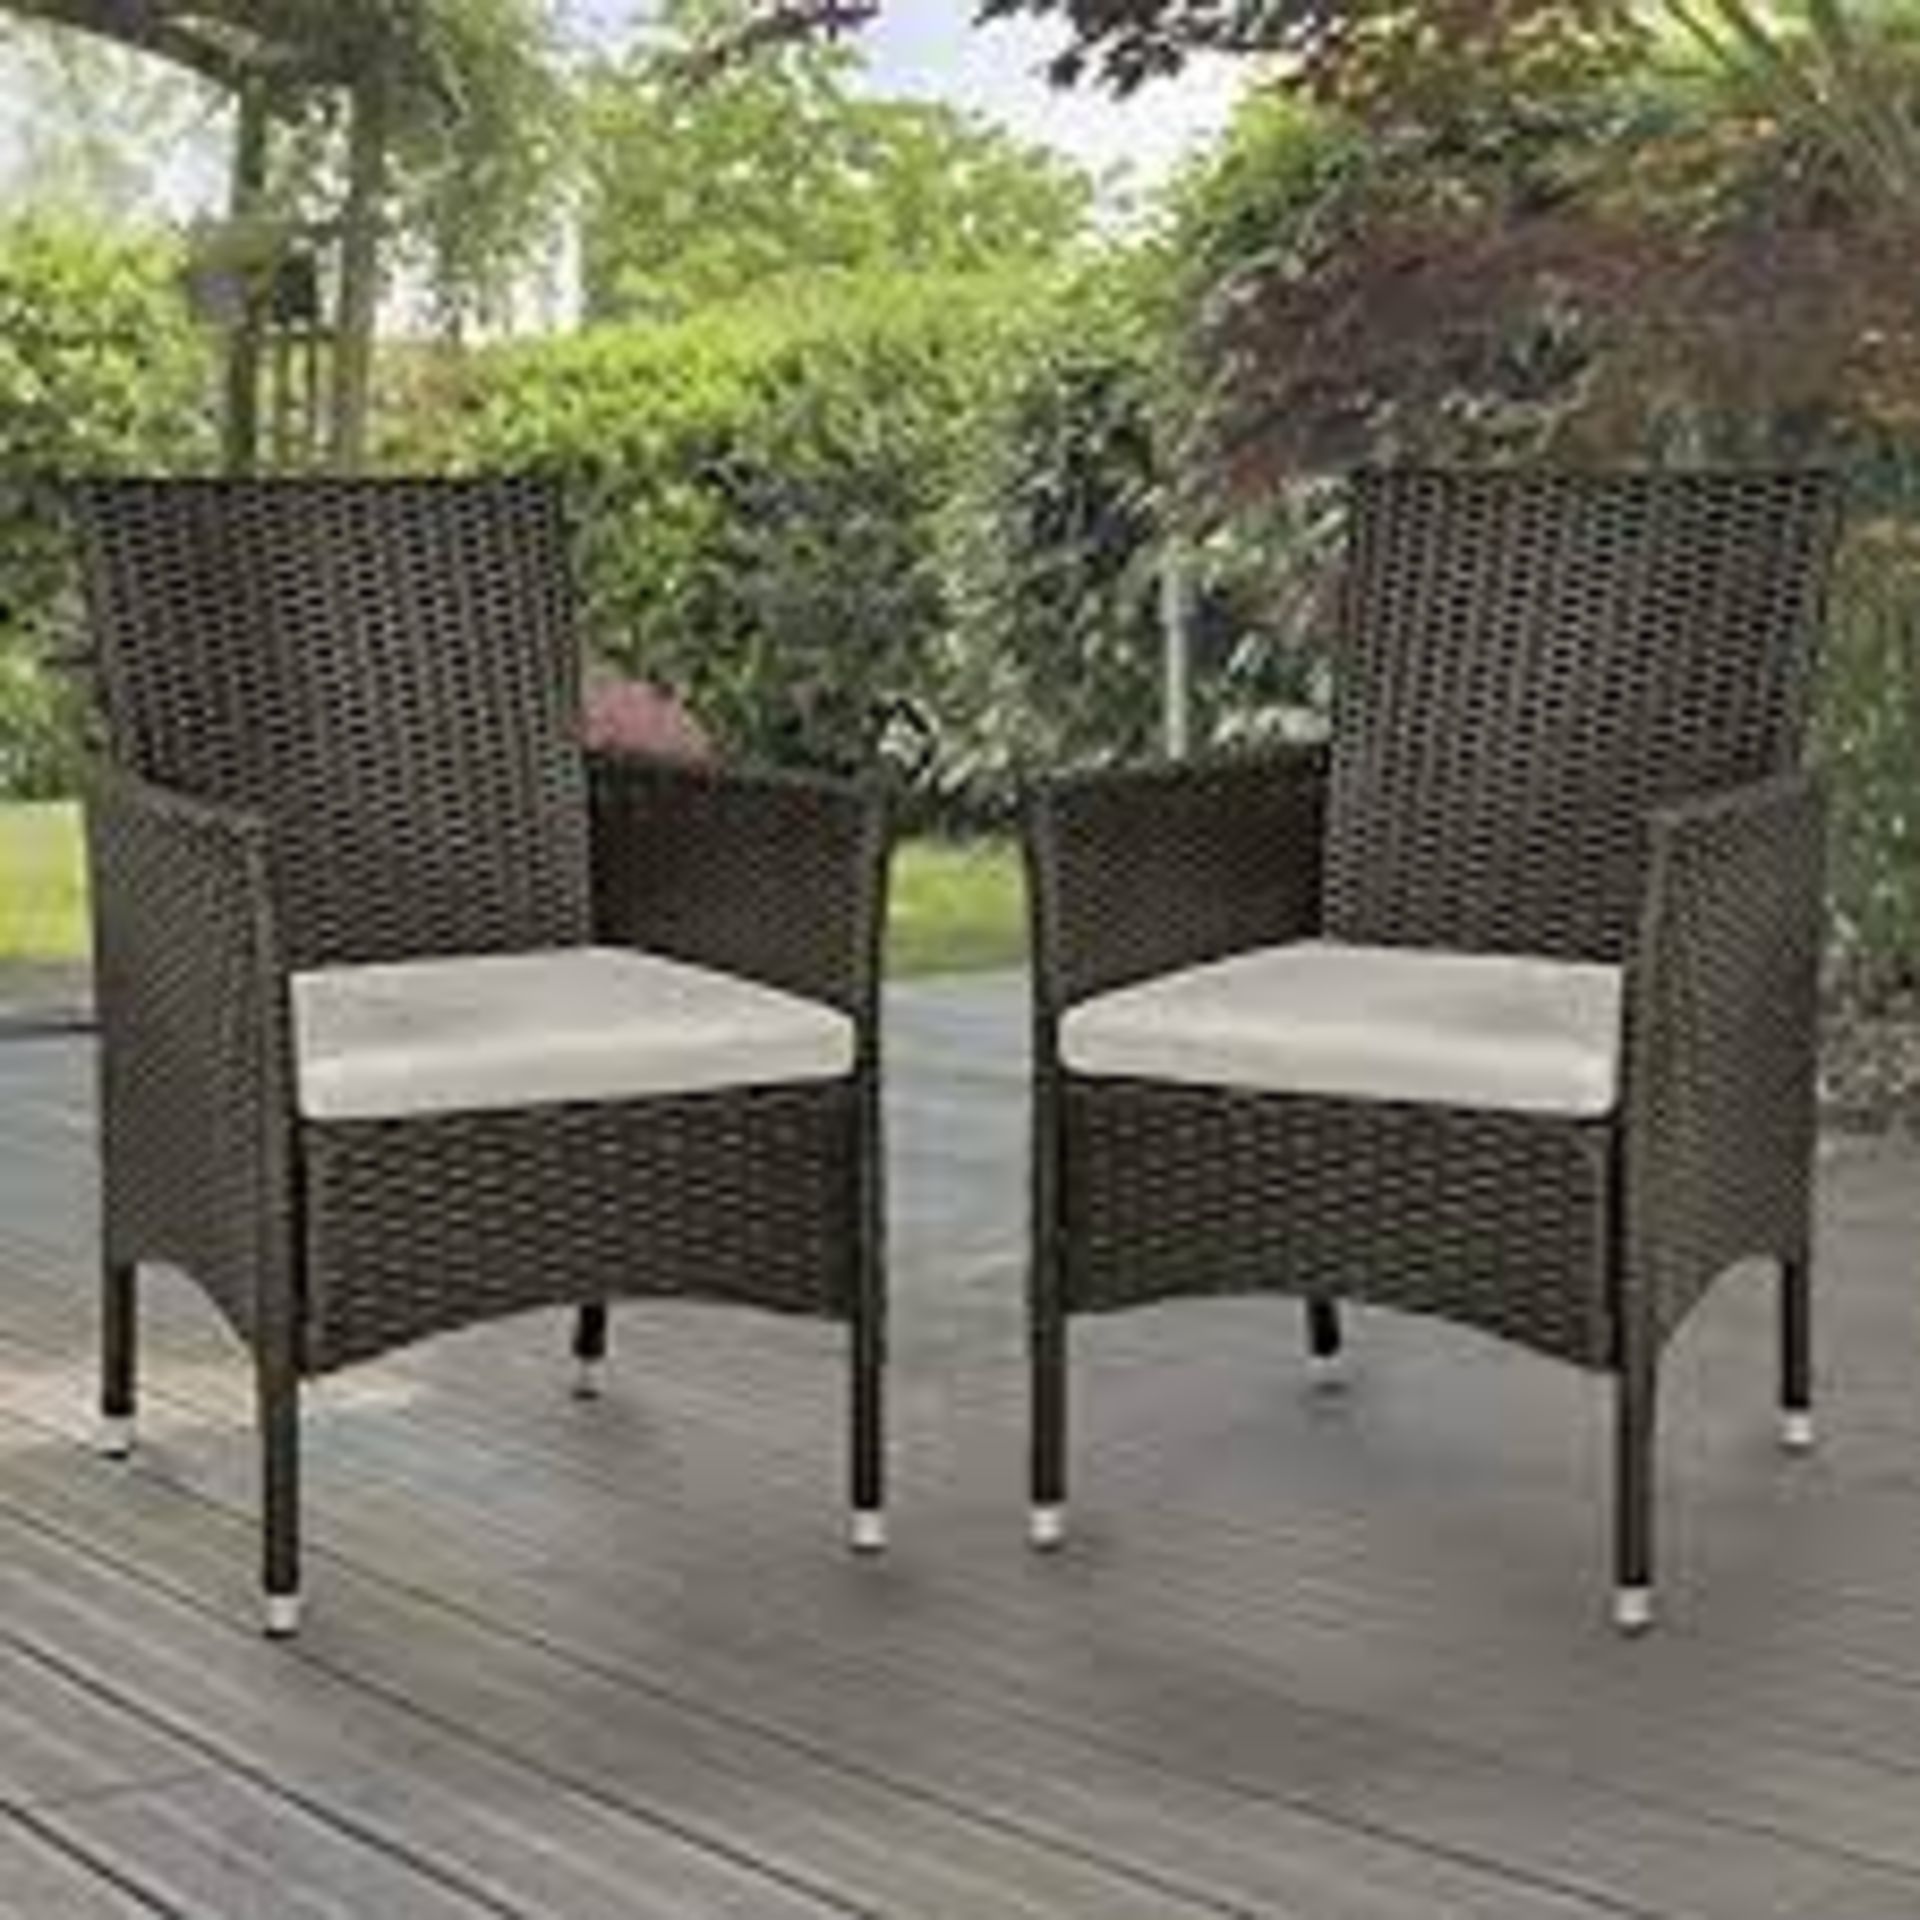 Brand New 2 Piece Rattan Garden Chairs Set RRP £219.00 - ROW1